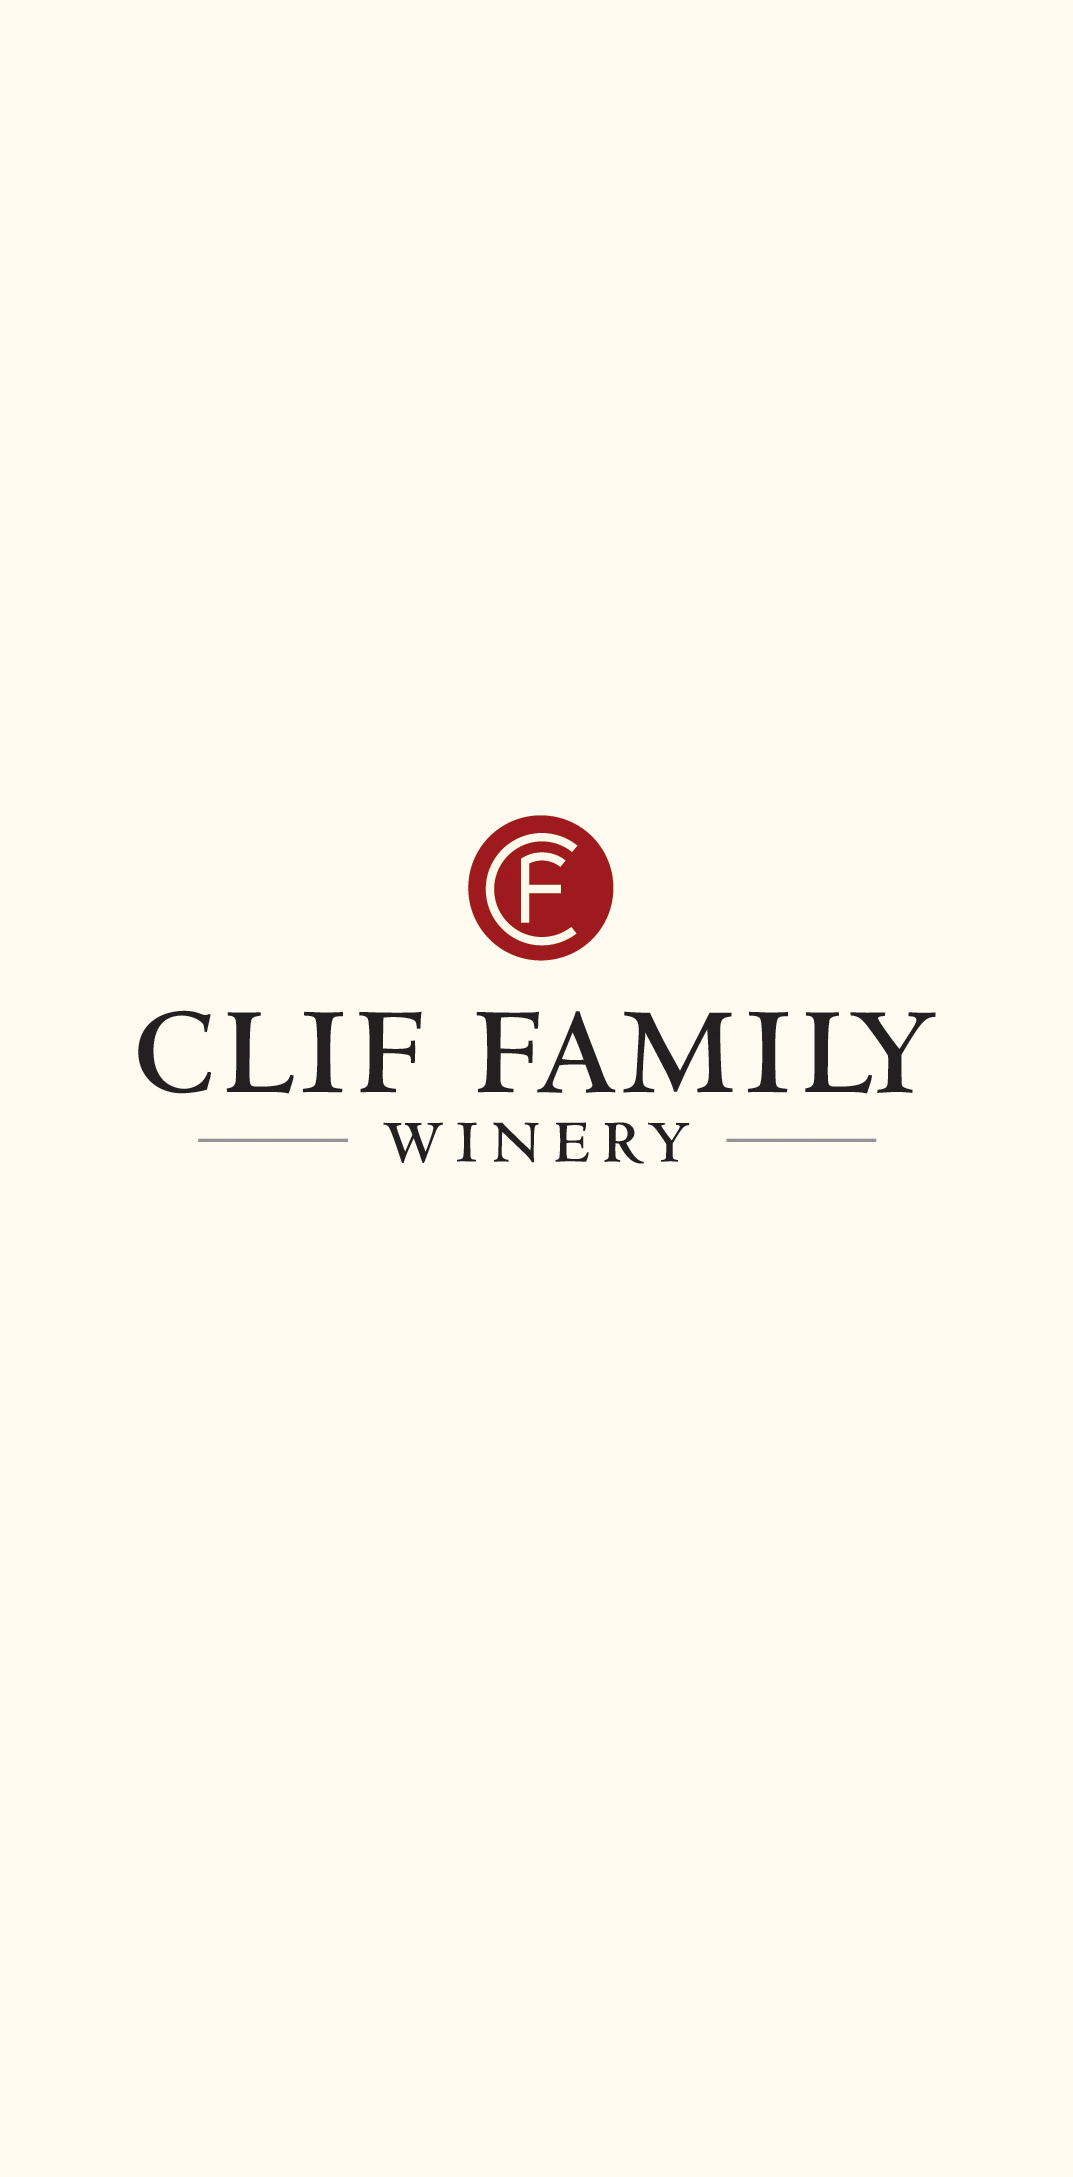 Clif Family Winery Logo Design